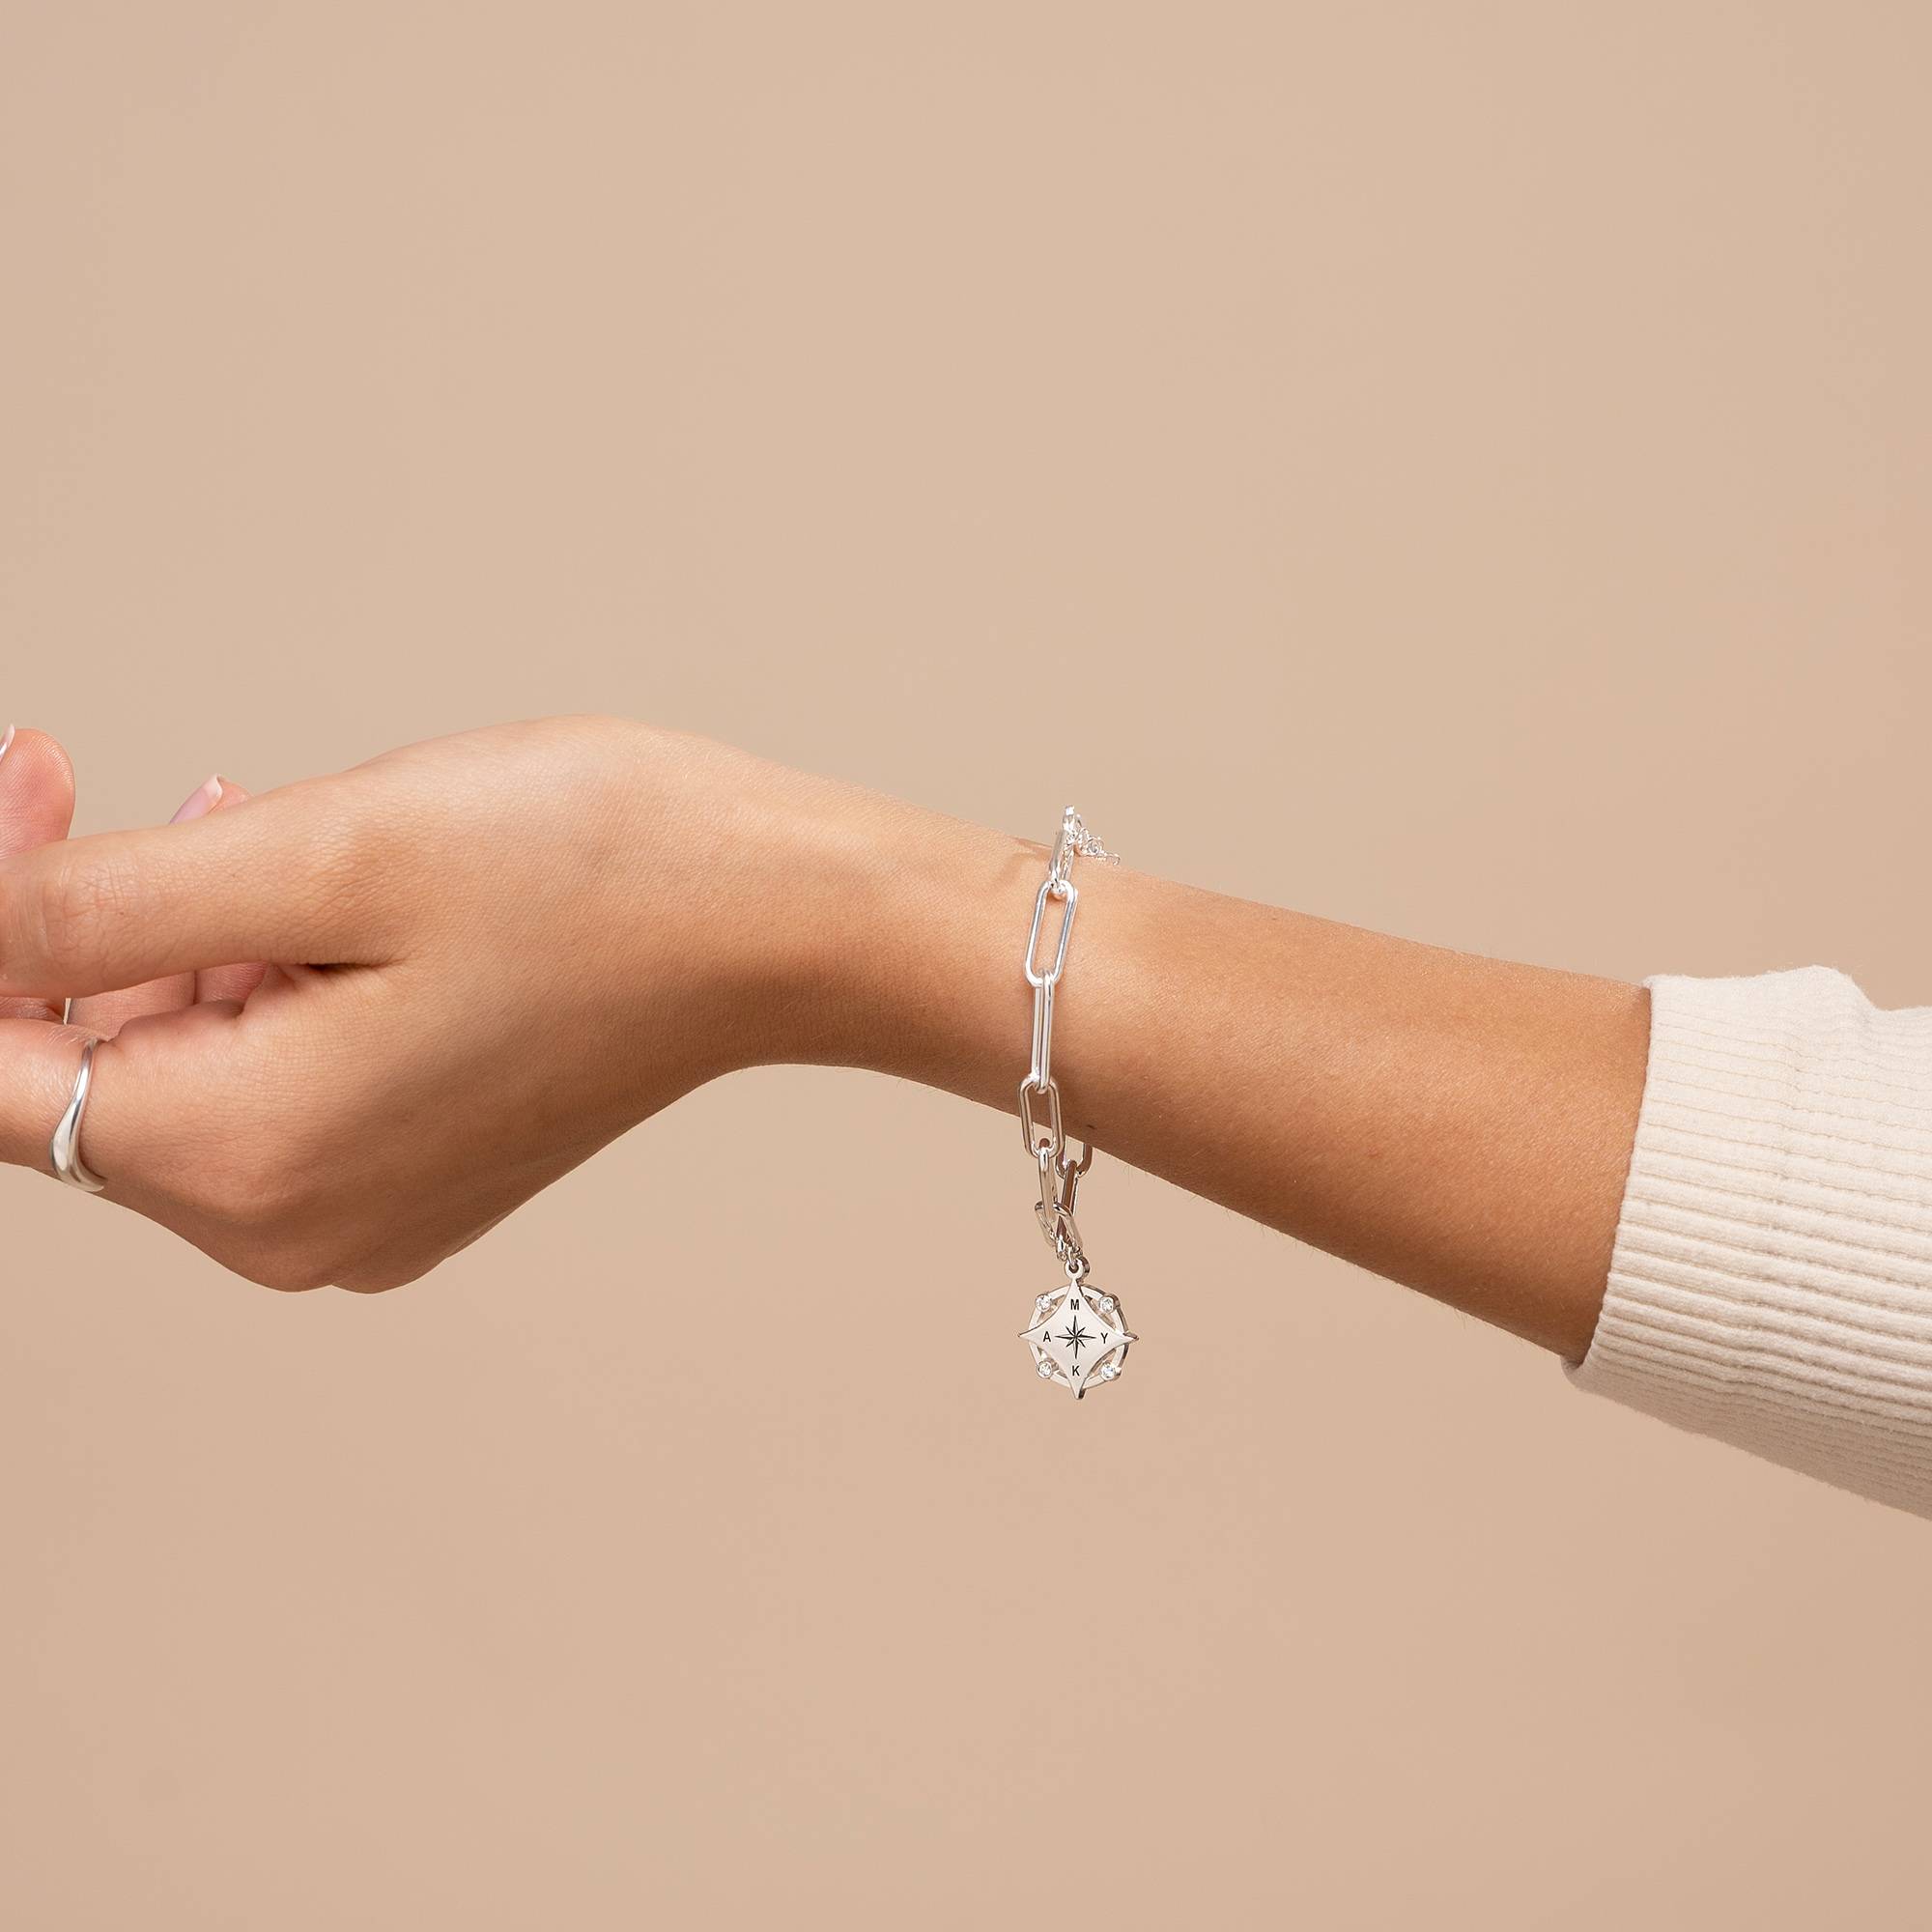 Kaia Initiaal Kompas Armband met Diamanten in Sterling Zilver-3 Productfoto